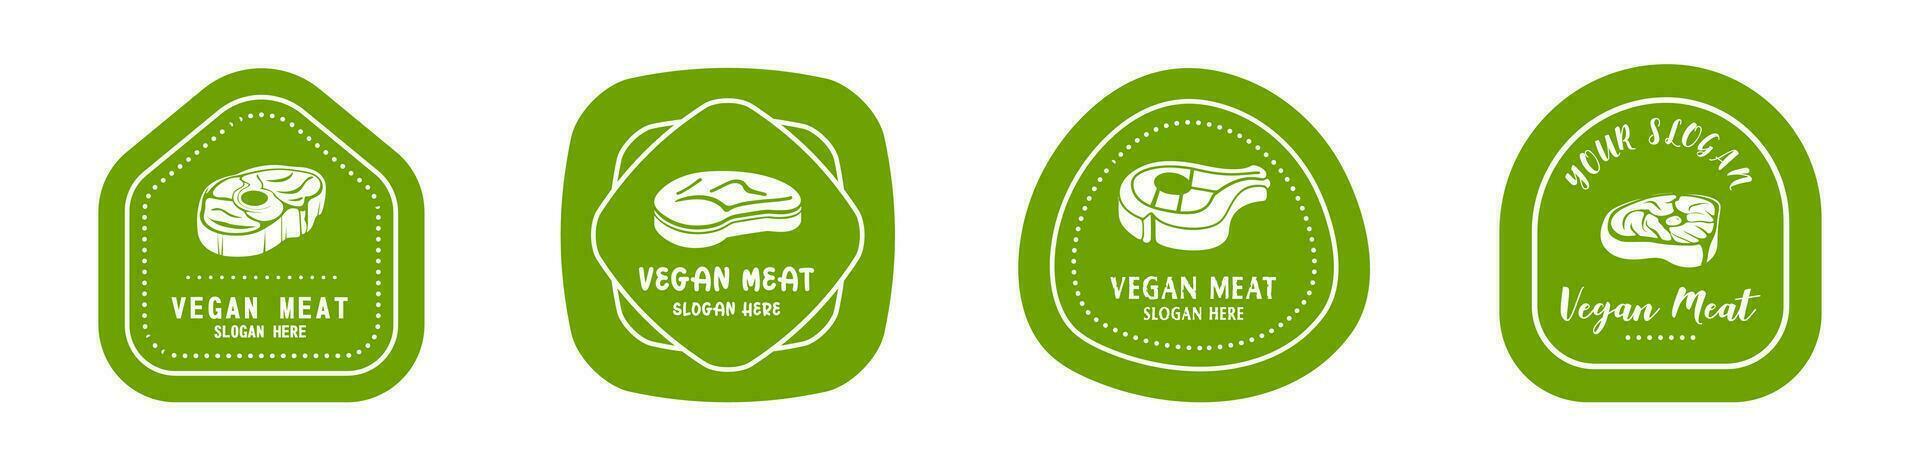 végétarien Viande prime logo. plante basé Viande logo. vecteur